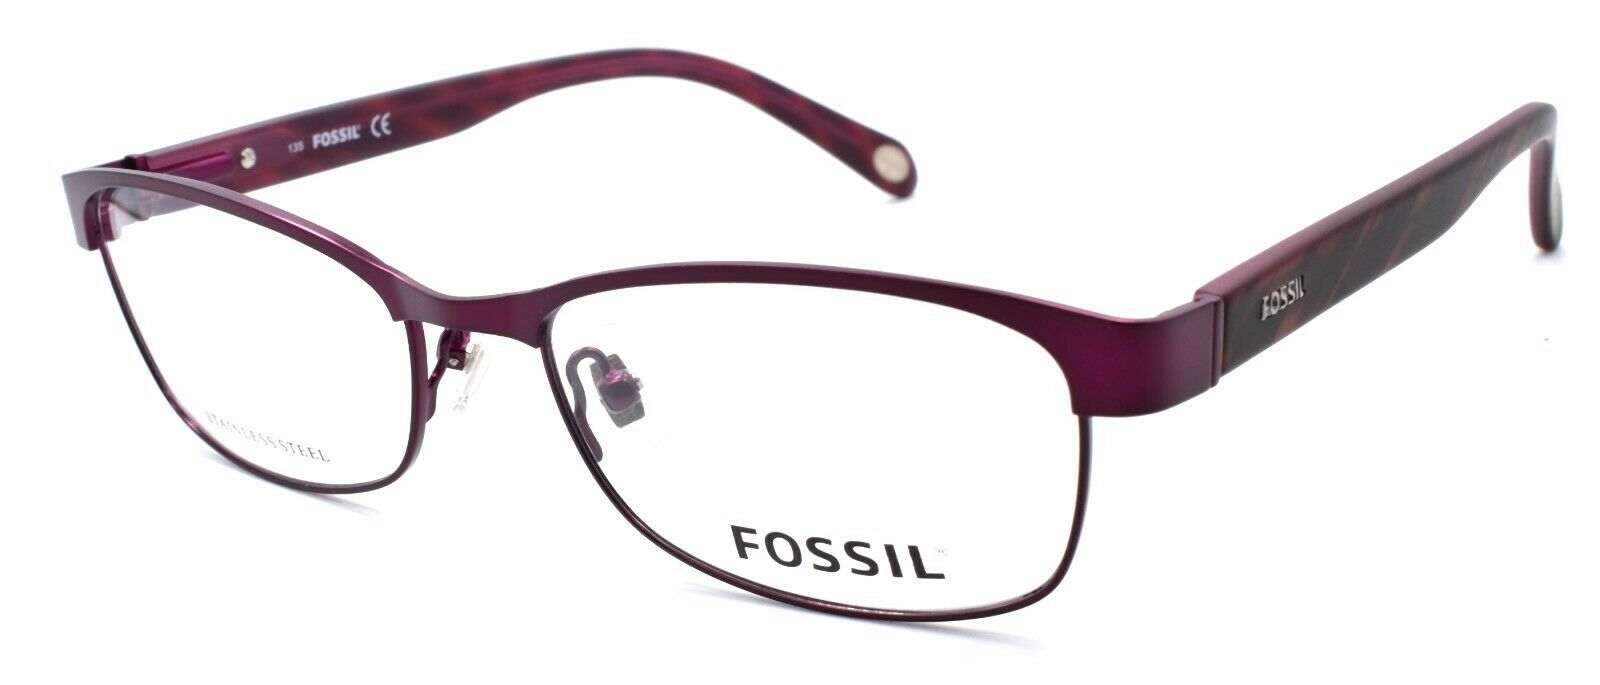 1-Fossil Libby 0JJU Women's Eyeglasses Frames 52-17-135 Satin Matte Purple-716737385784-IKSpecs